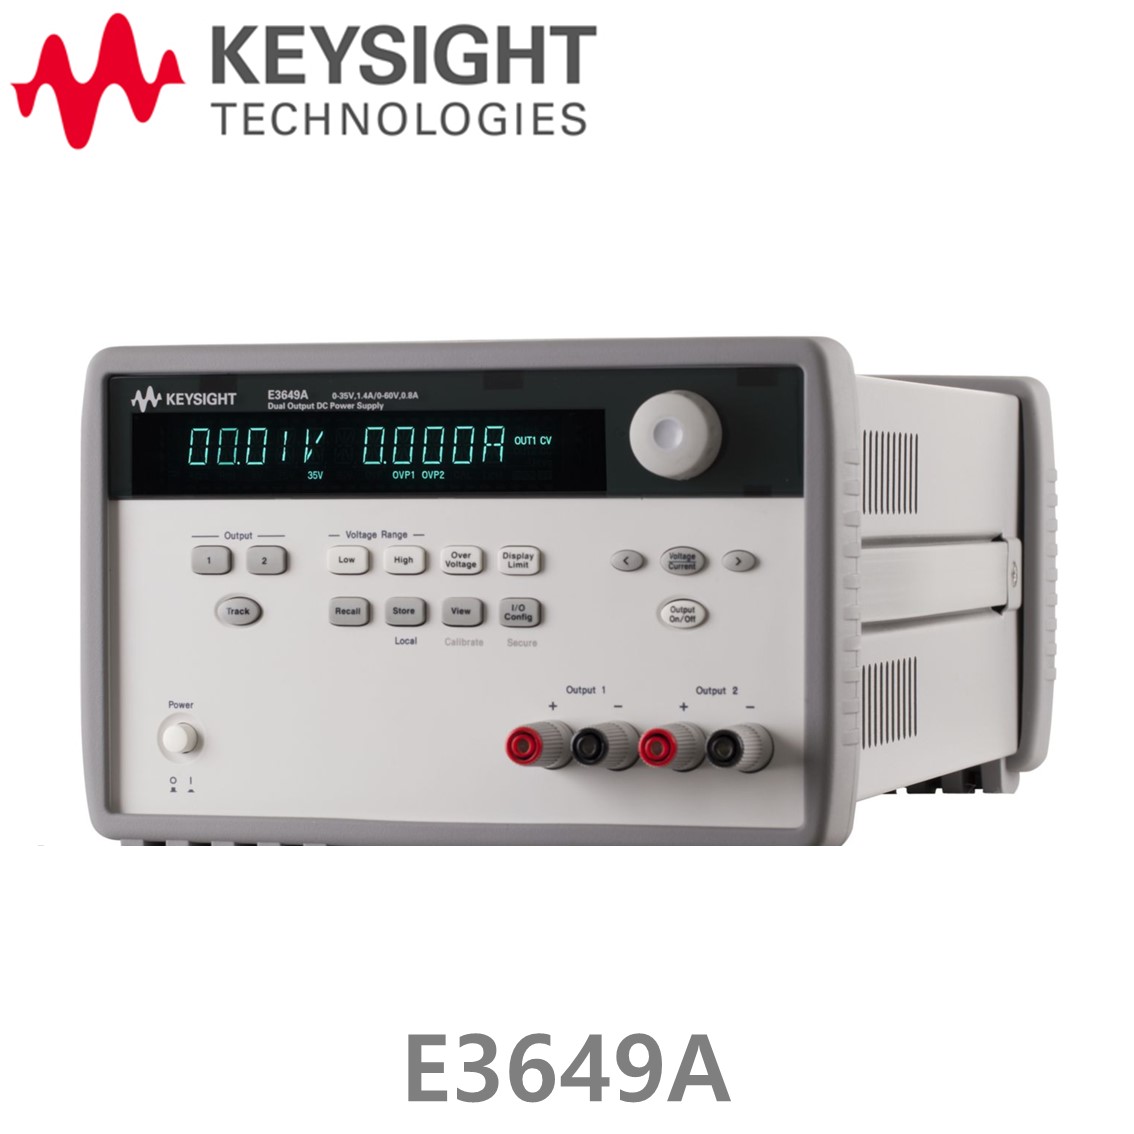 [KEYSIGHT E3649A] 키사이트 DC파워서플라이 100W 35V/1.4A/2CH, 60V/0.8A/2CH, DC전원공급기